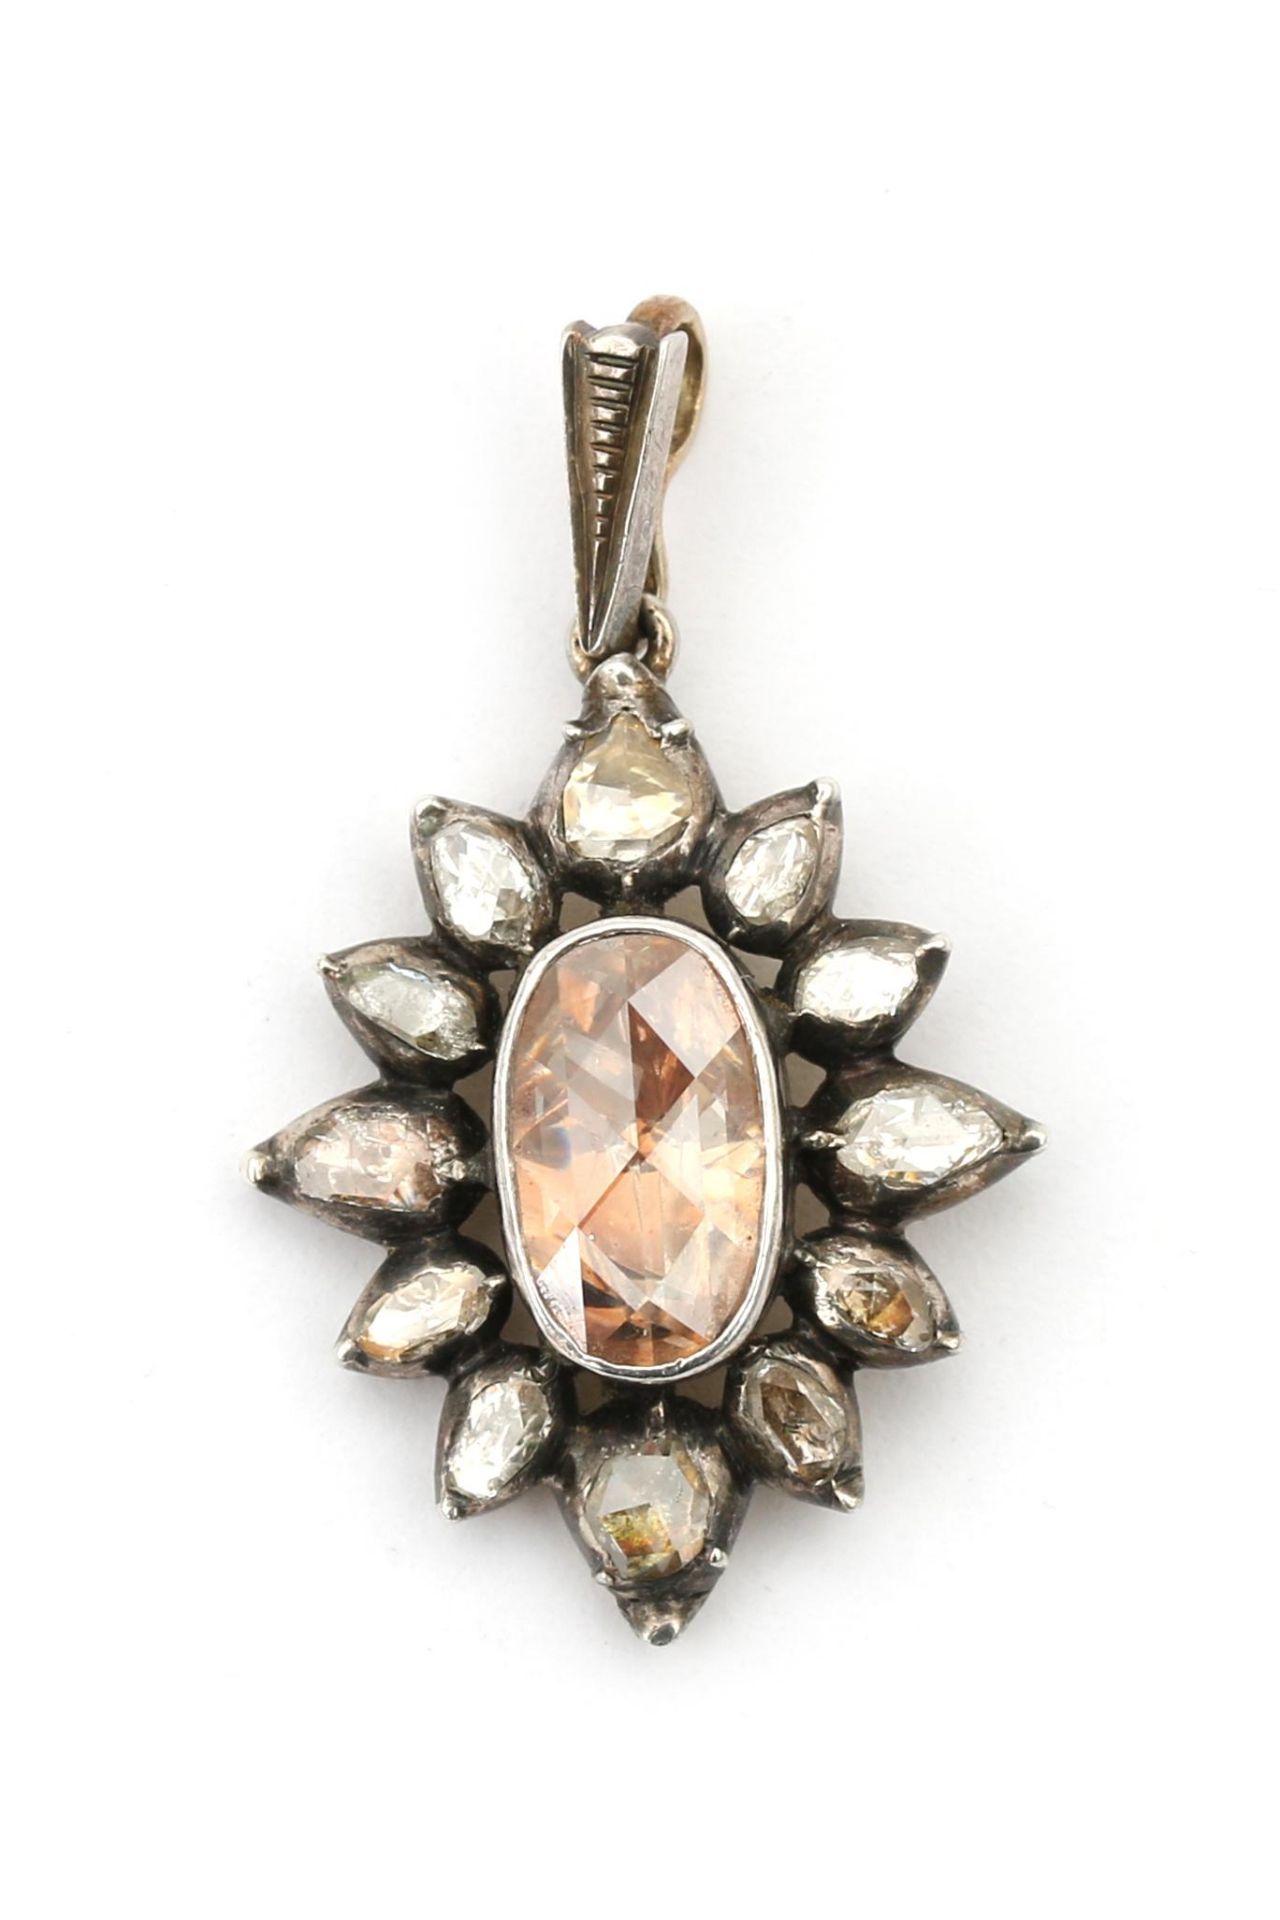 A 14 karat gold with silver rose cut diamond pendant, Rozendaal